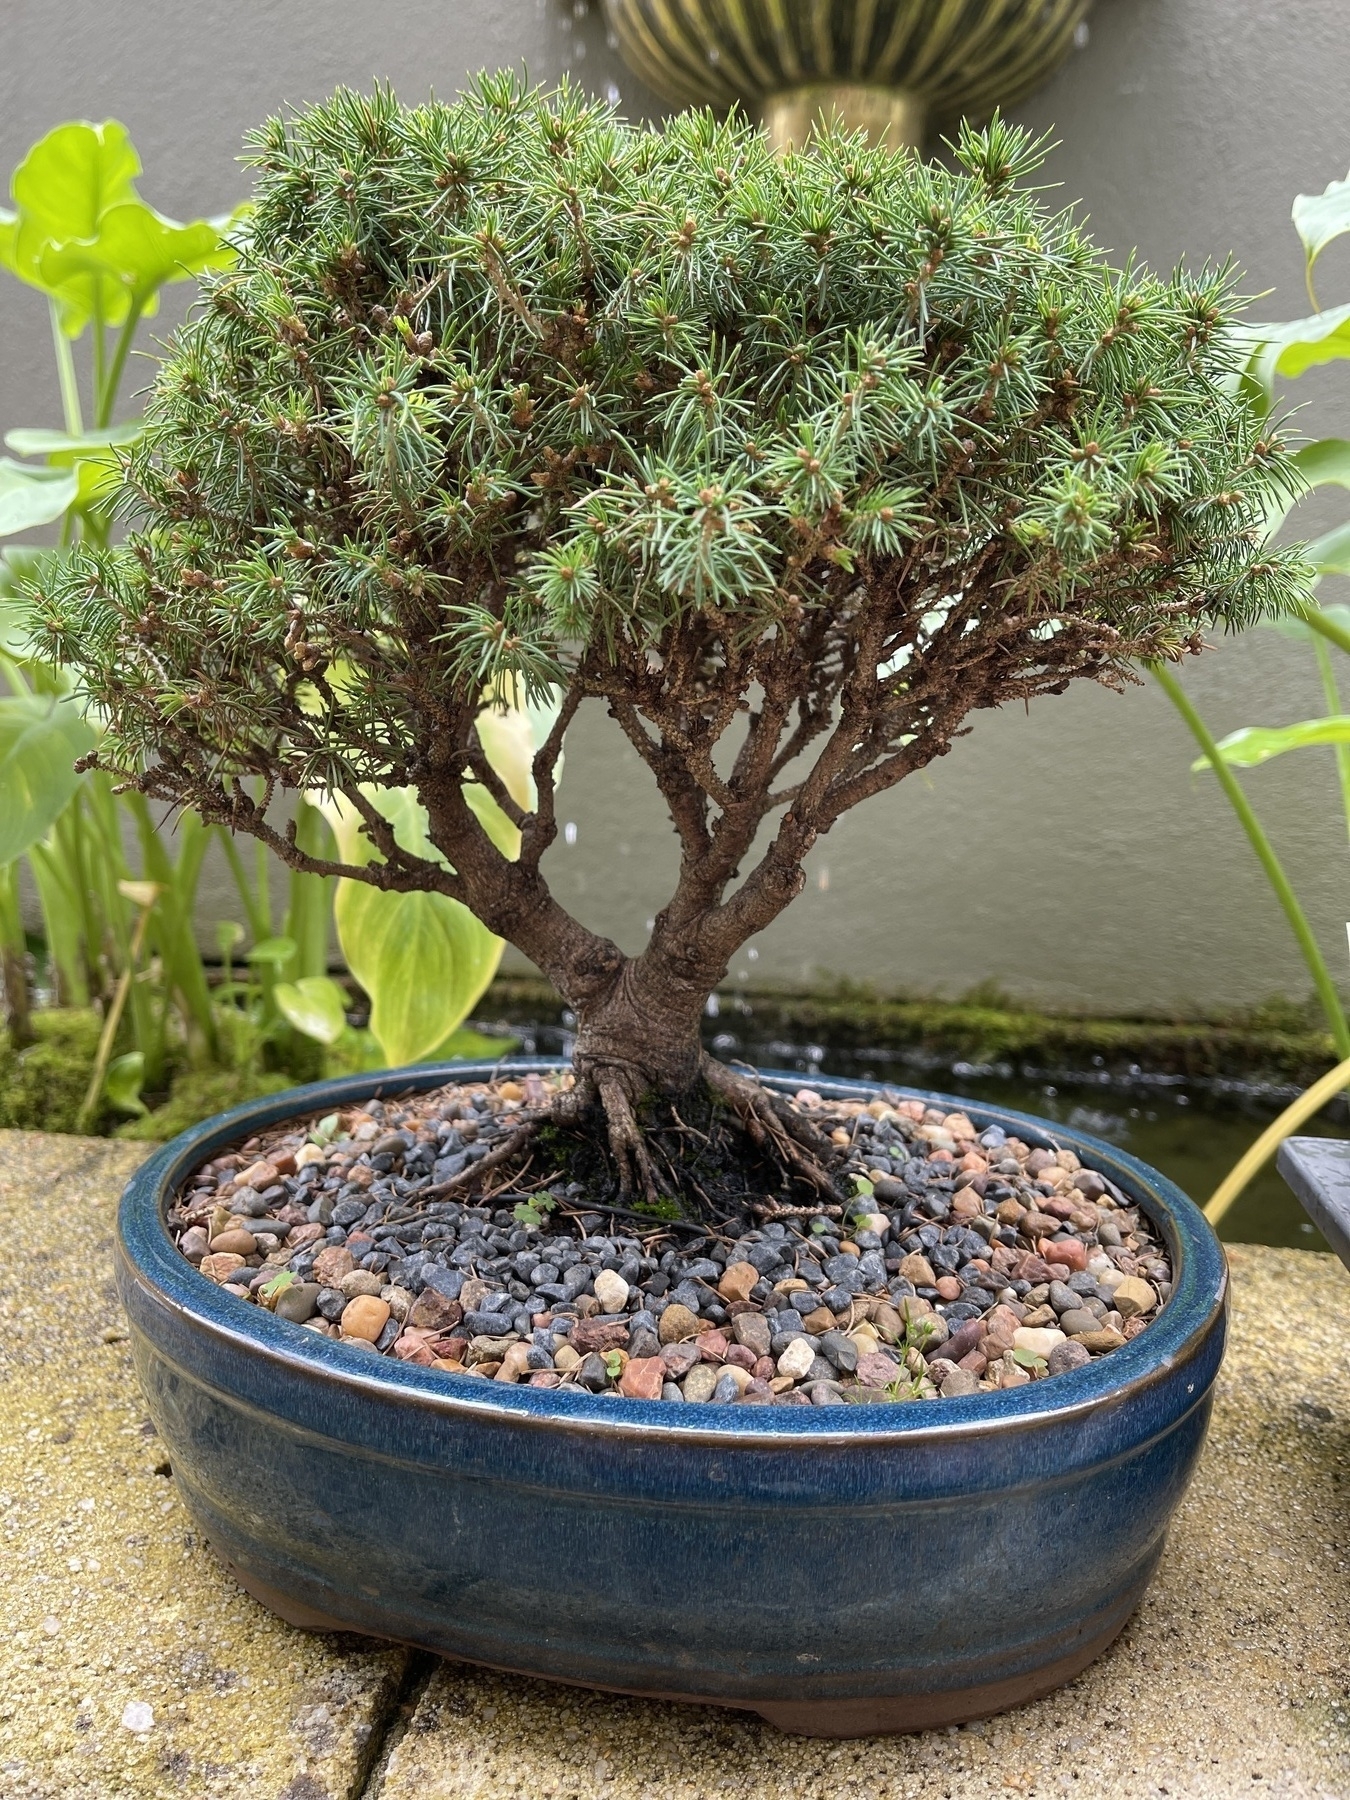 A very healthy looking Dwarf Alberta Spruce bonsai tree carefully potted in a blue glazed pot. 